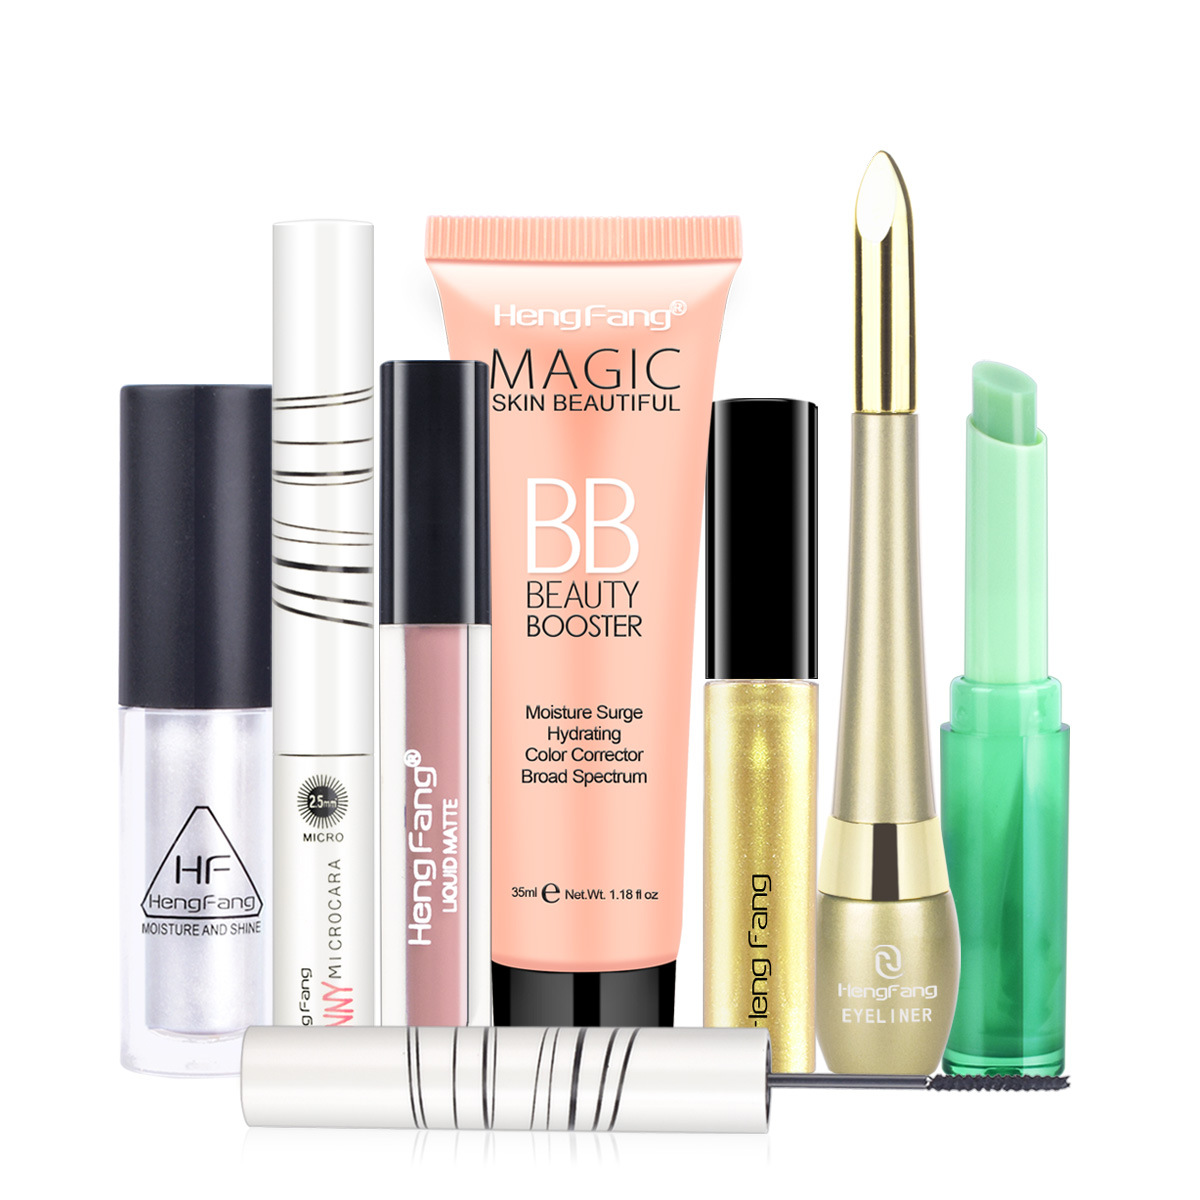 7 Pcs Rouge A Levres Maquillage Ensemble Durable Lip Gloss Mascara Eyeliner BB Creme Kit Impermeable a leau Maquillage Kit